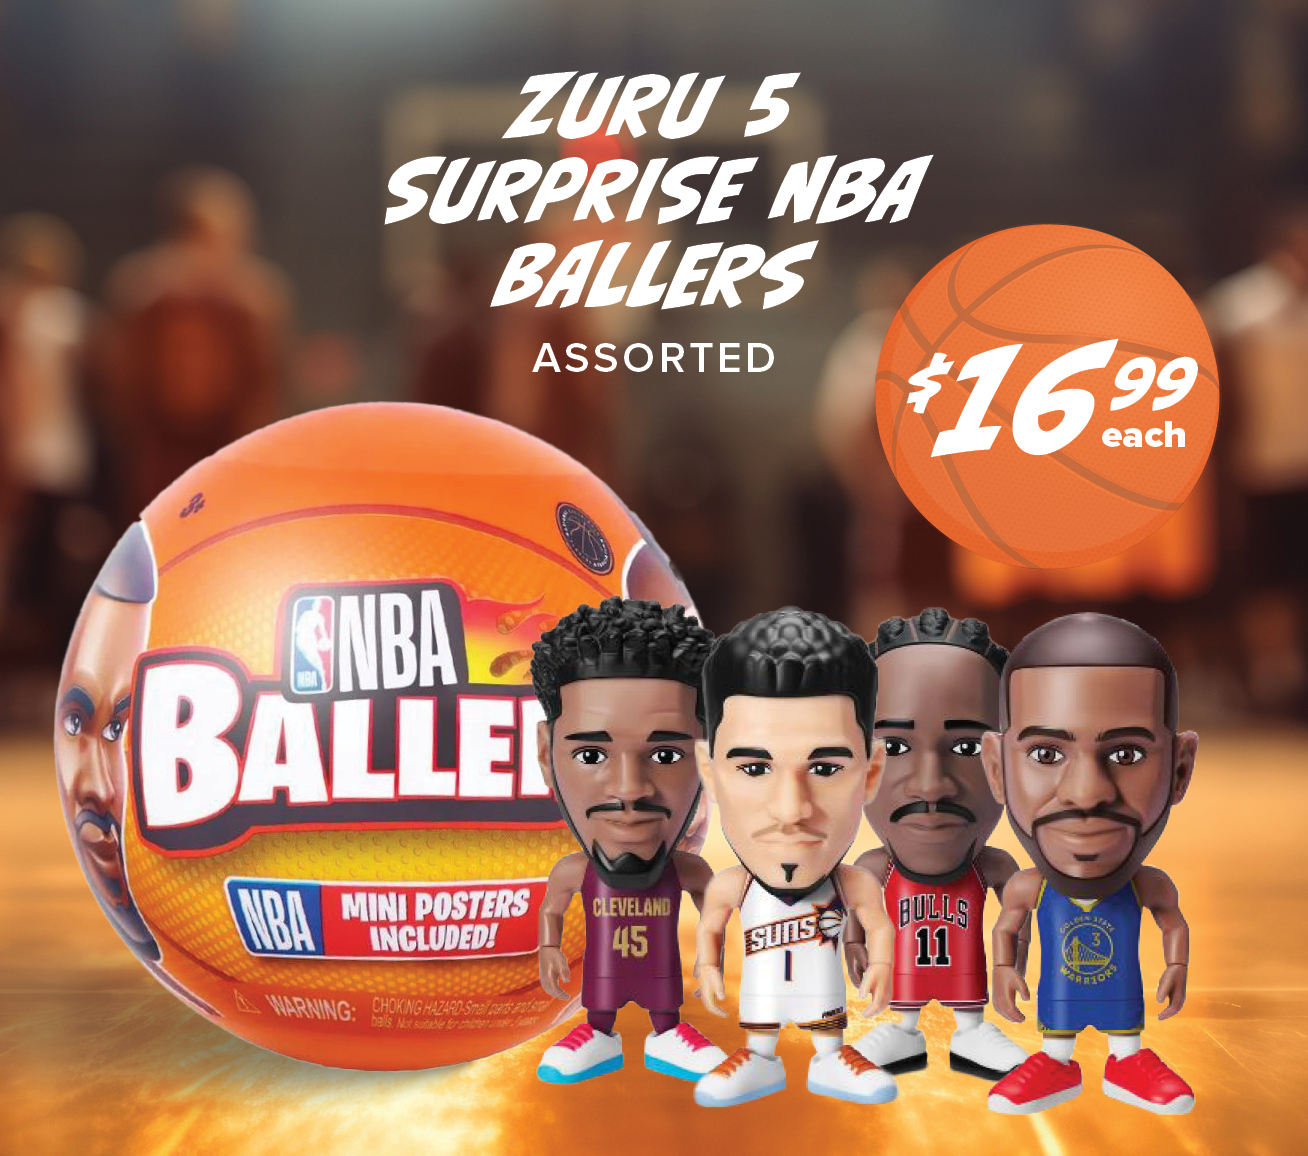 Zuru 5 Surprise NBA Ballers